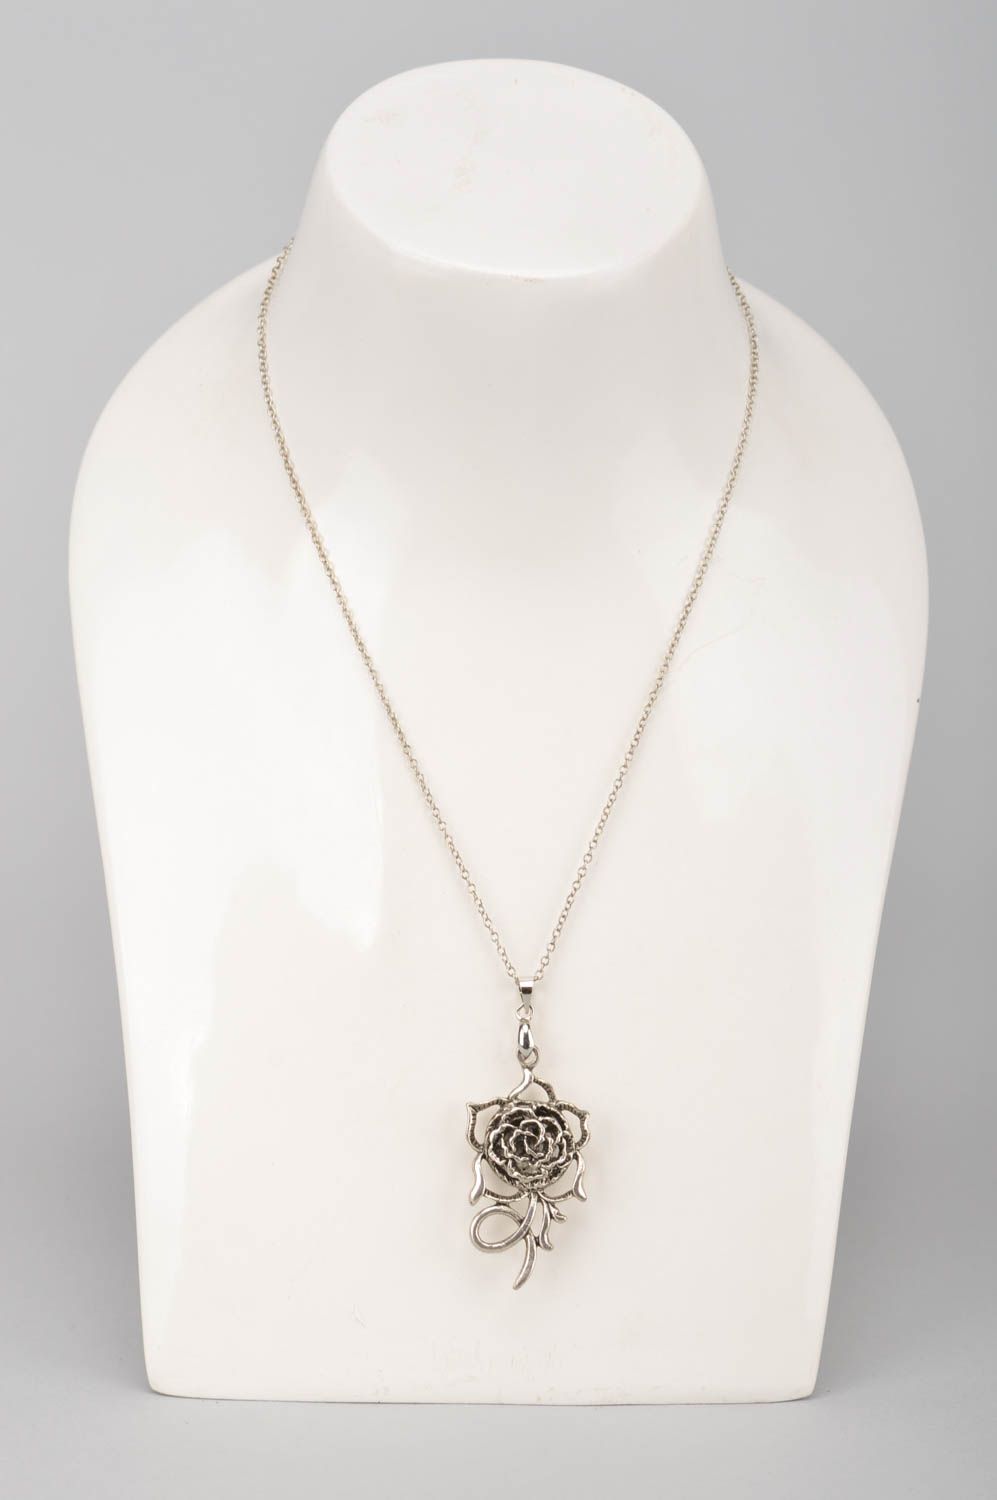 Unusual handmade metal neck pendant designer pendant for women gifts for her photo 2